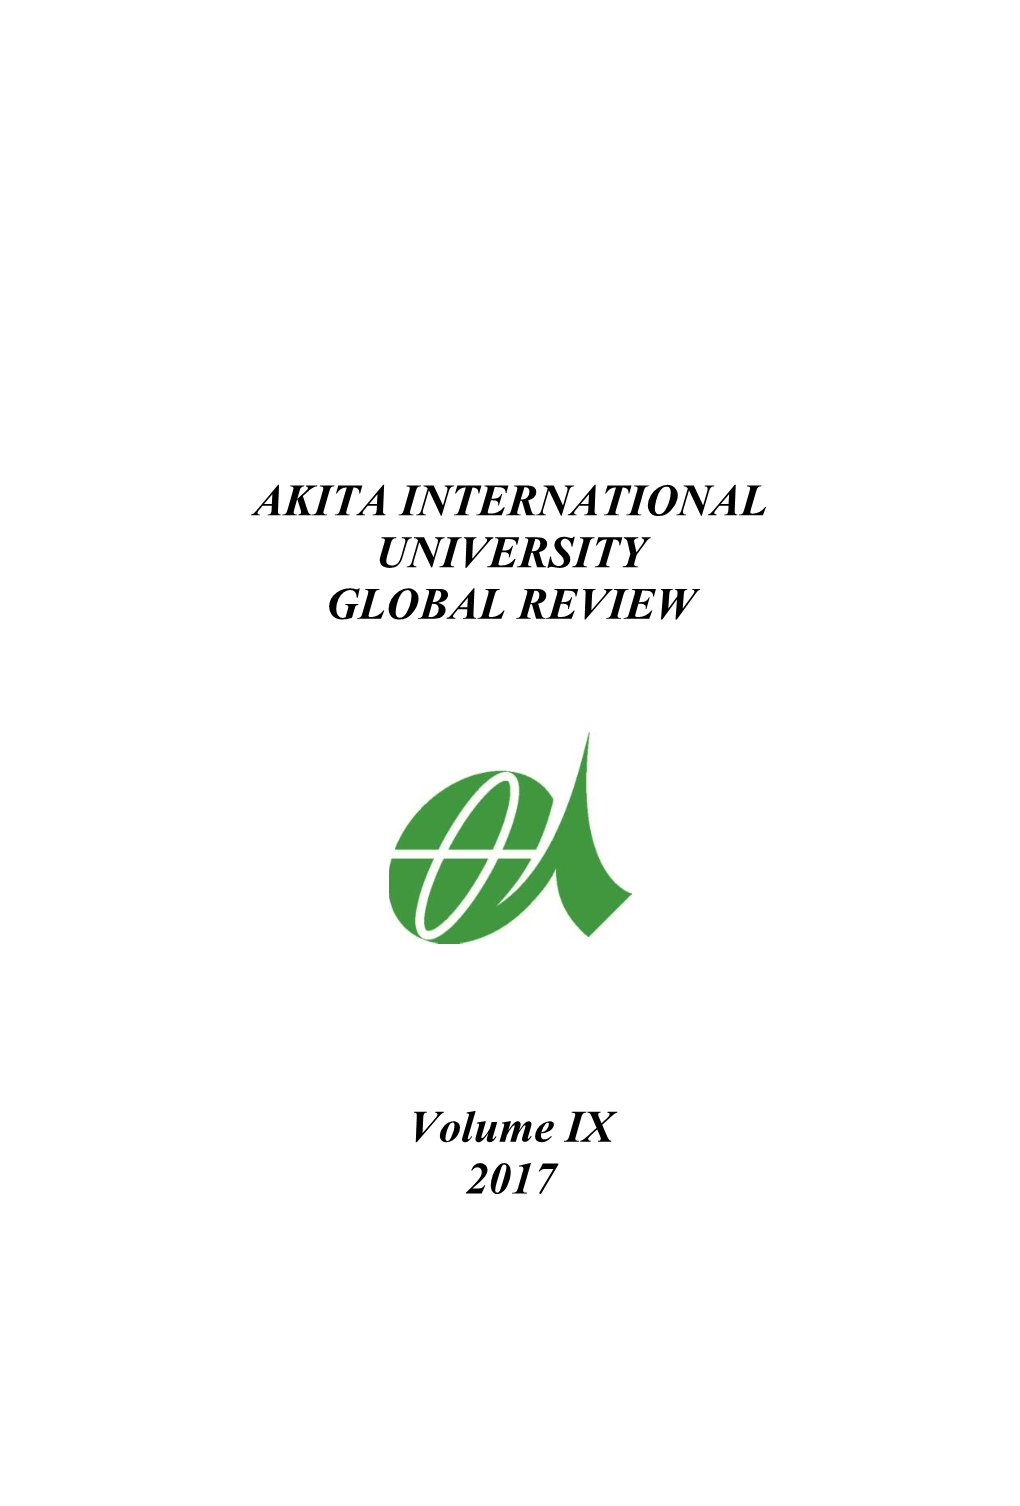 AKITA INTERNATIONAL UNIVERSITY GLOBAL REVIEW Volume IX 2017